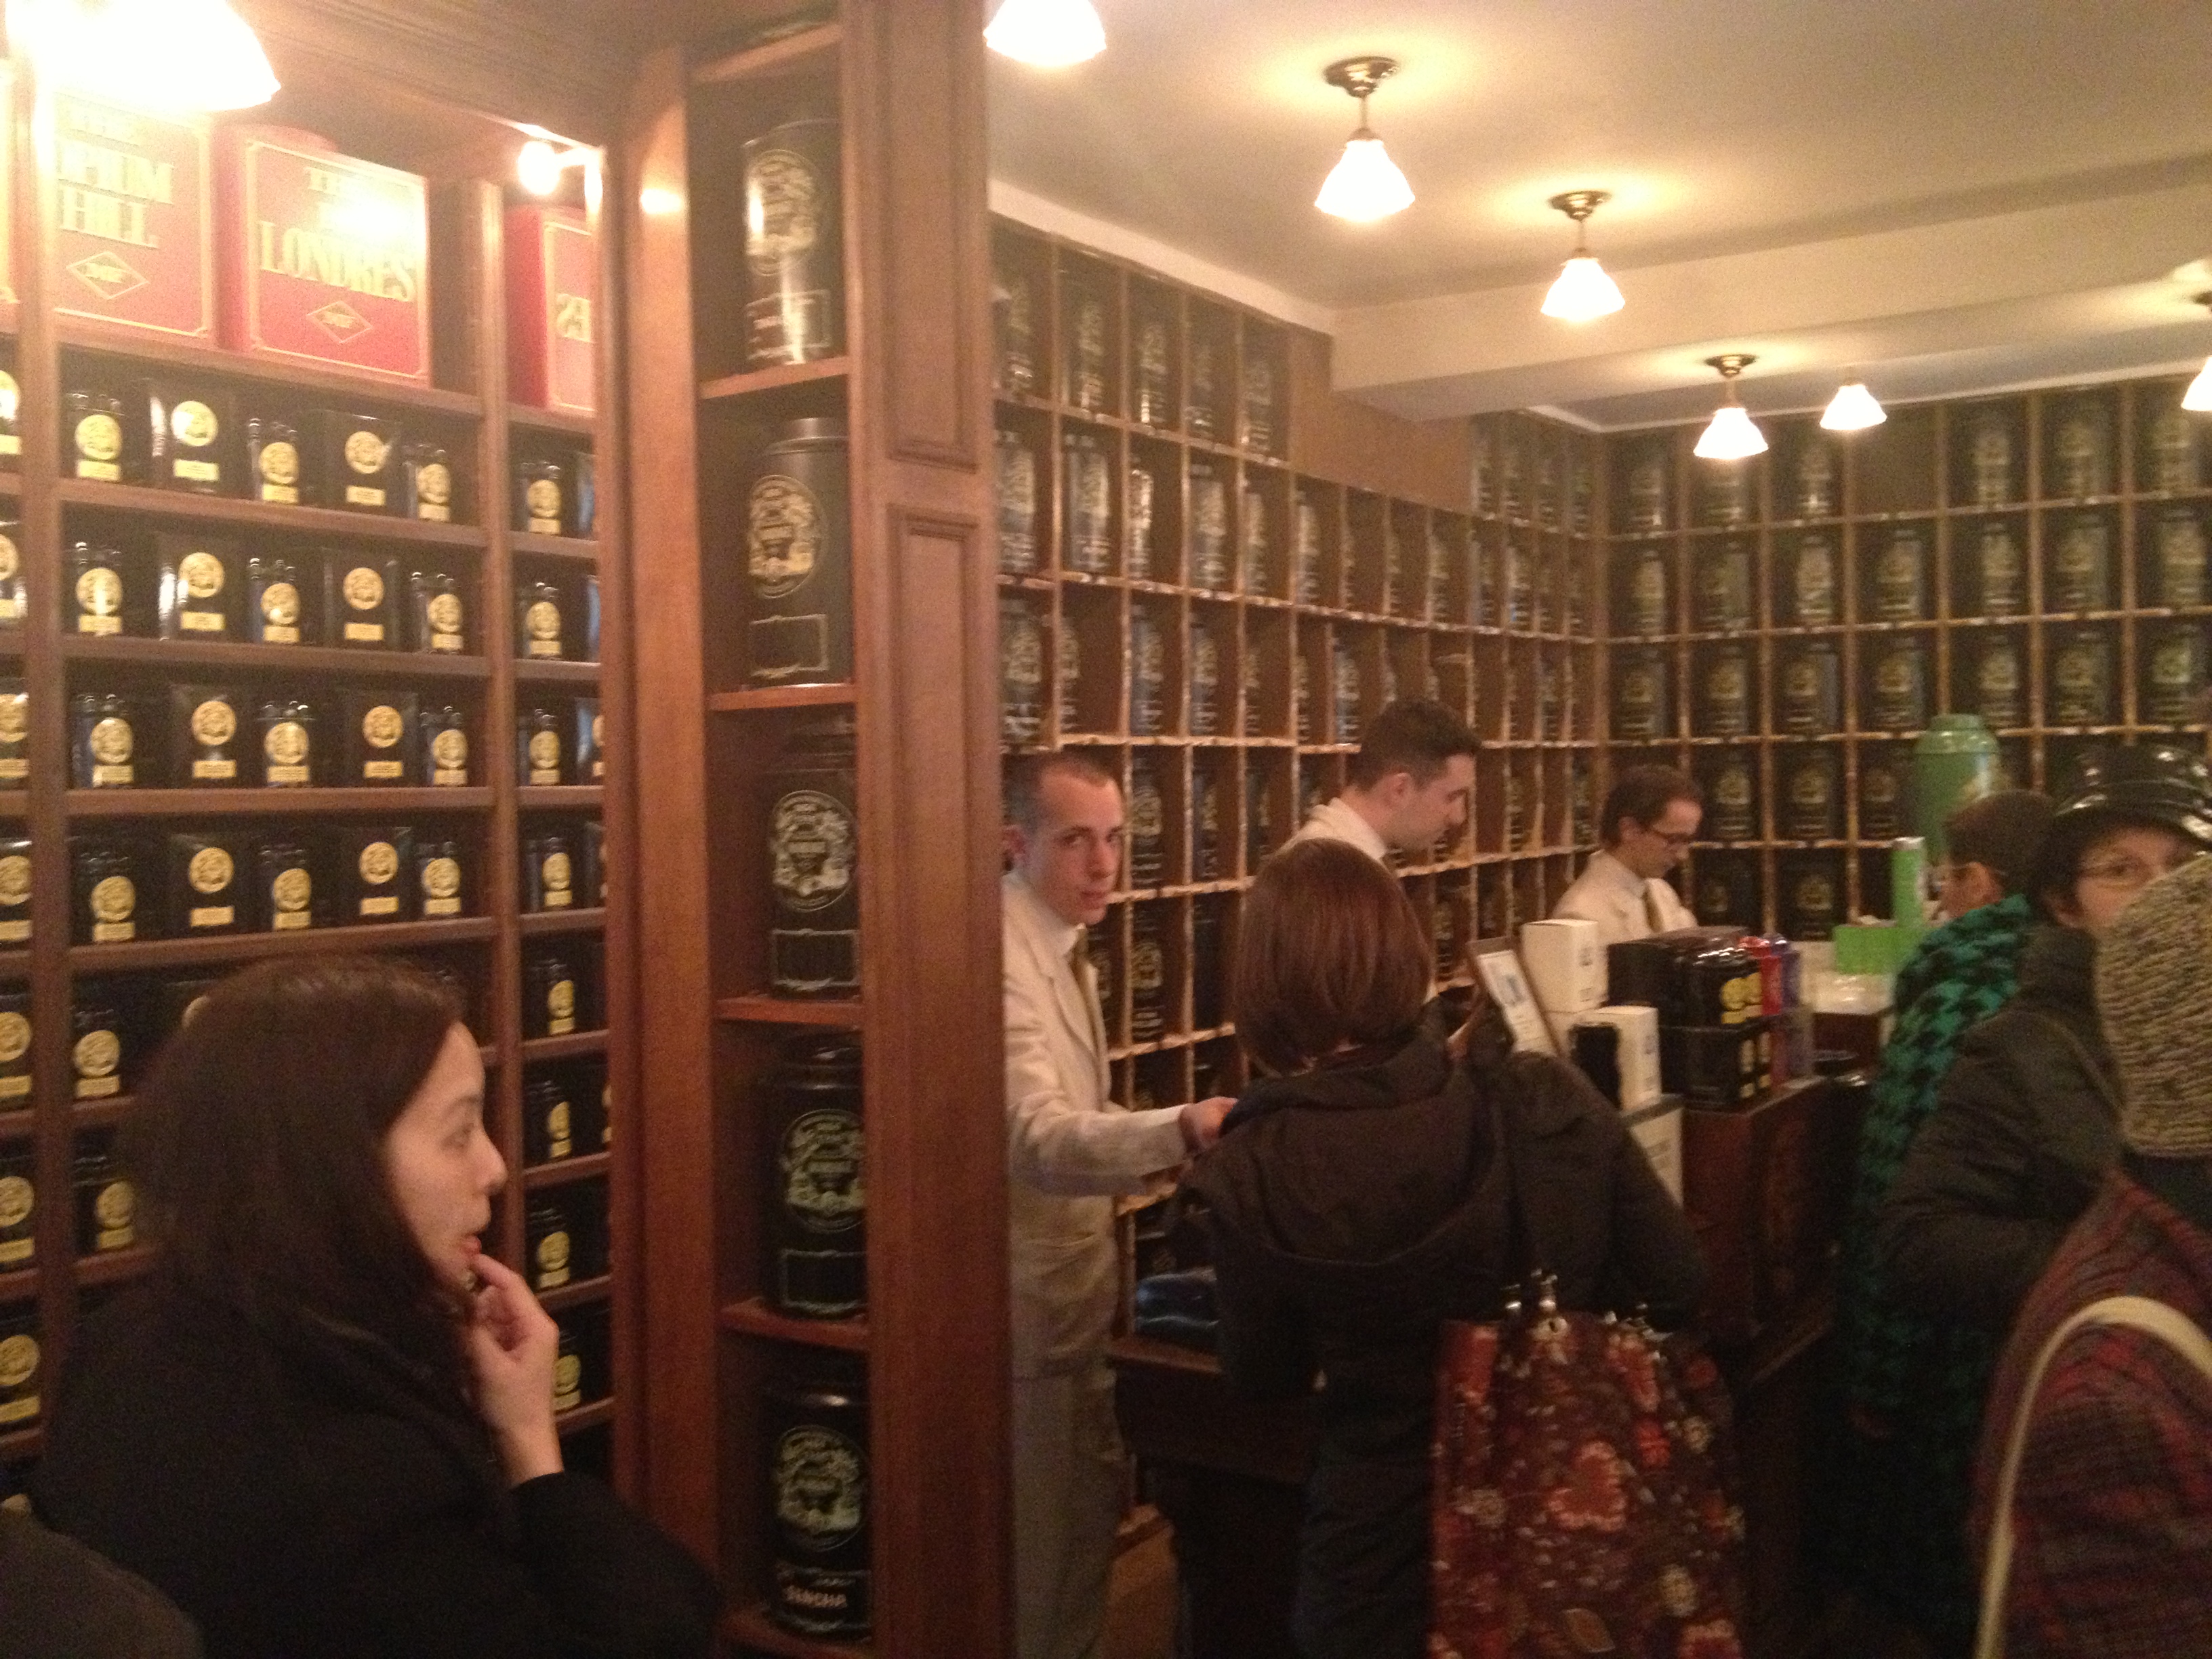 Paris - Mariage Freres Tea Salon, Don't pass by this fabulo…